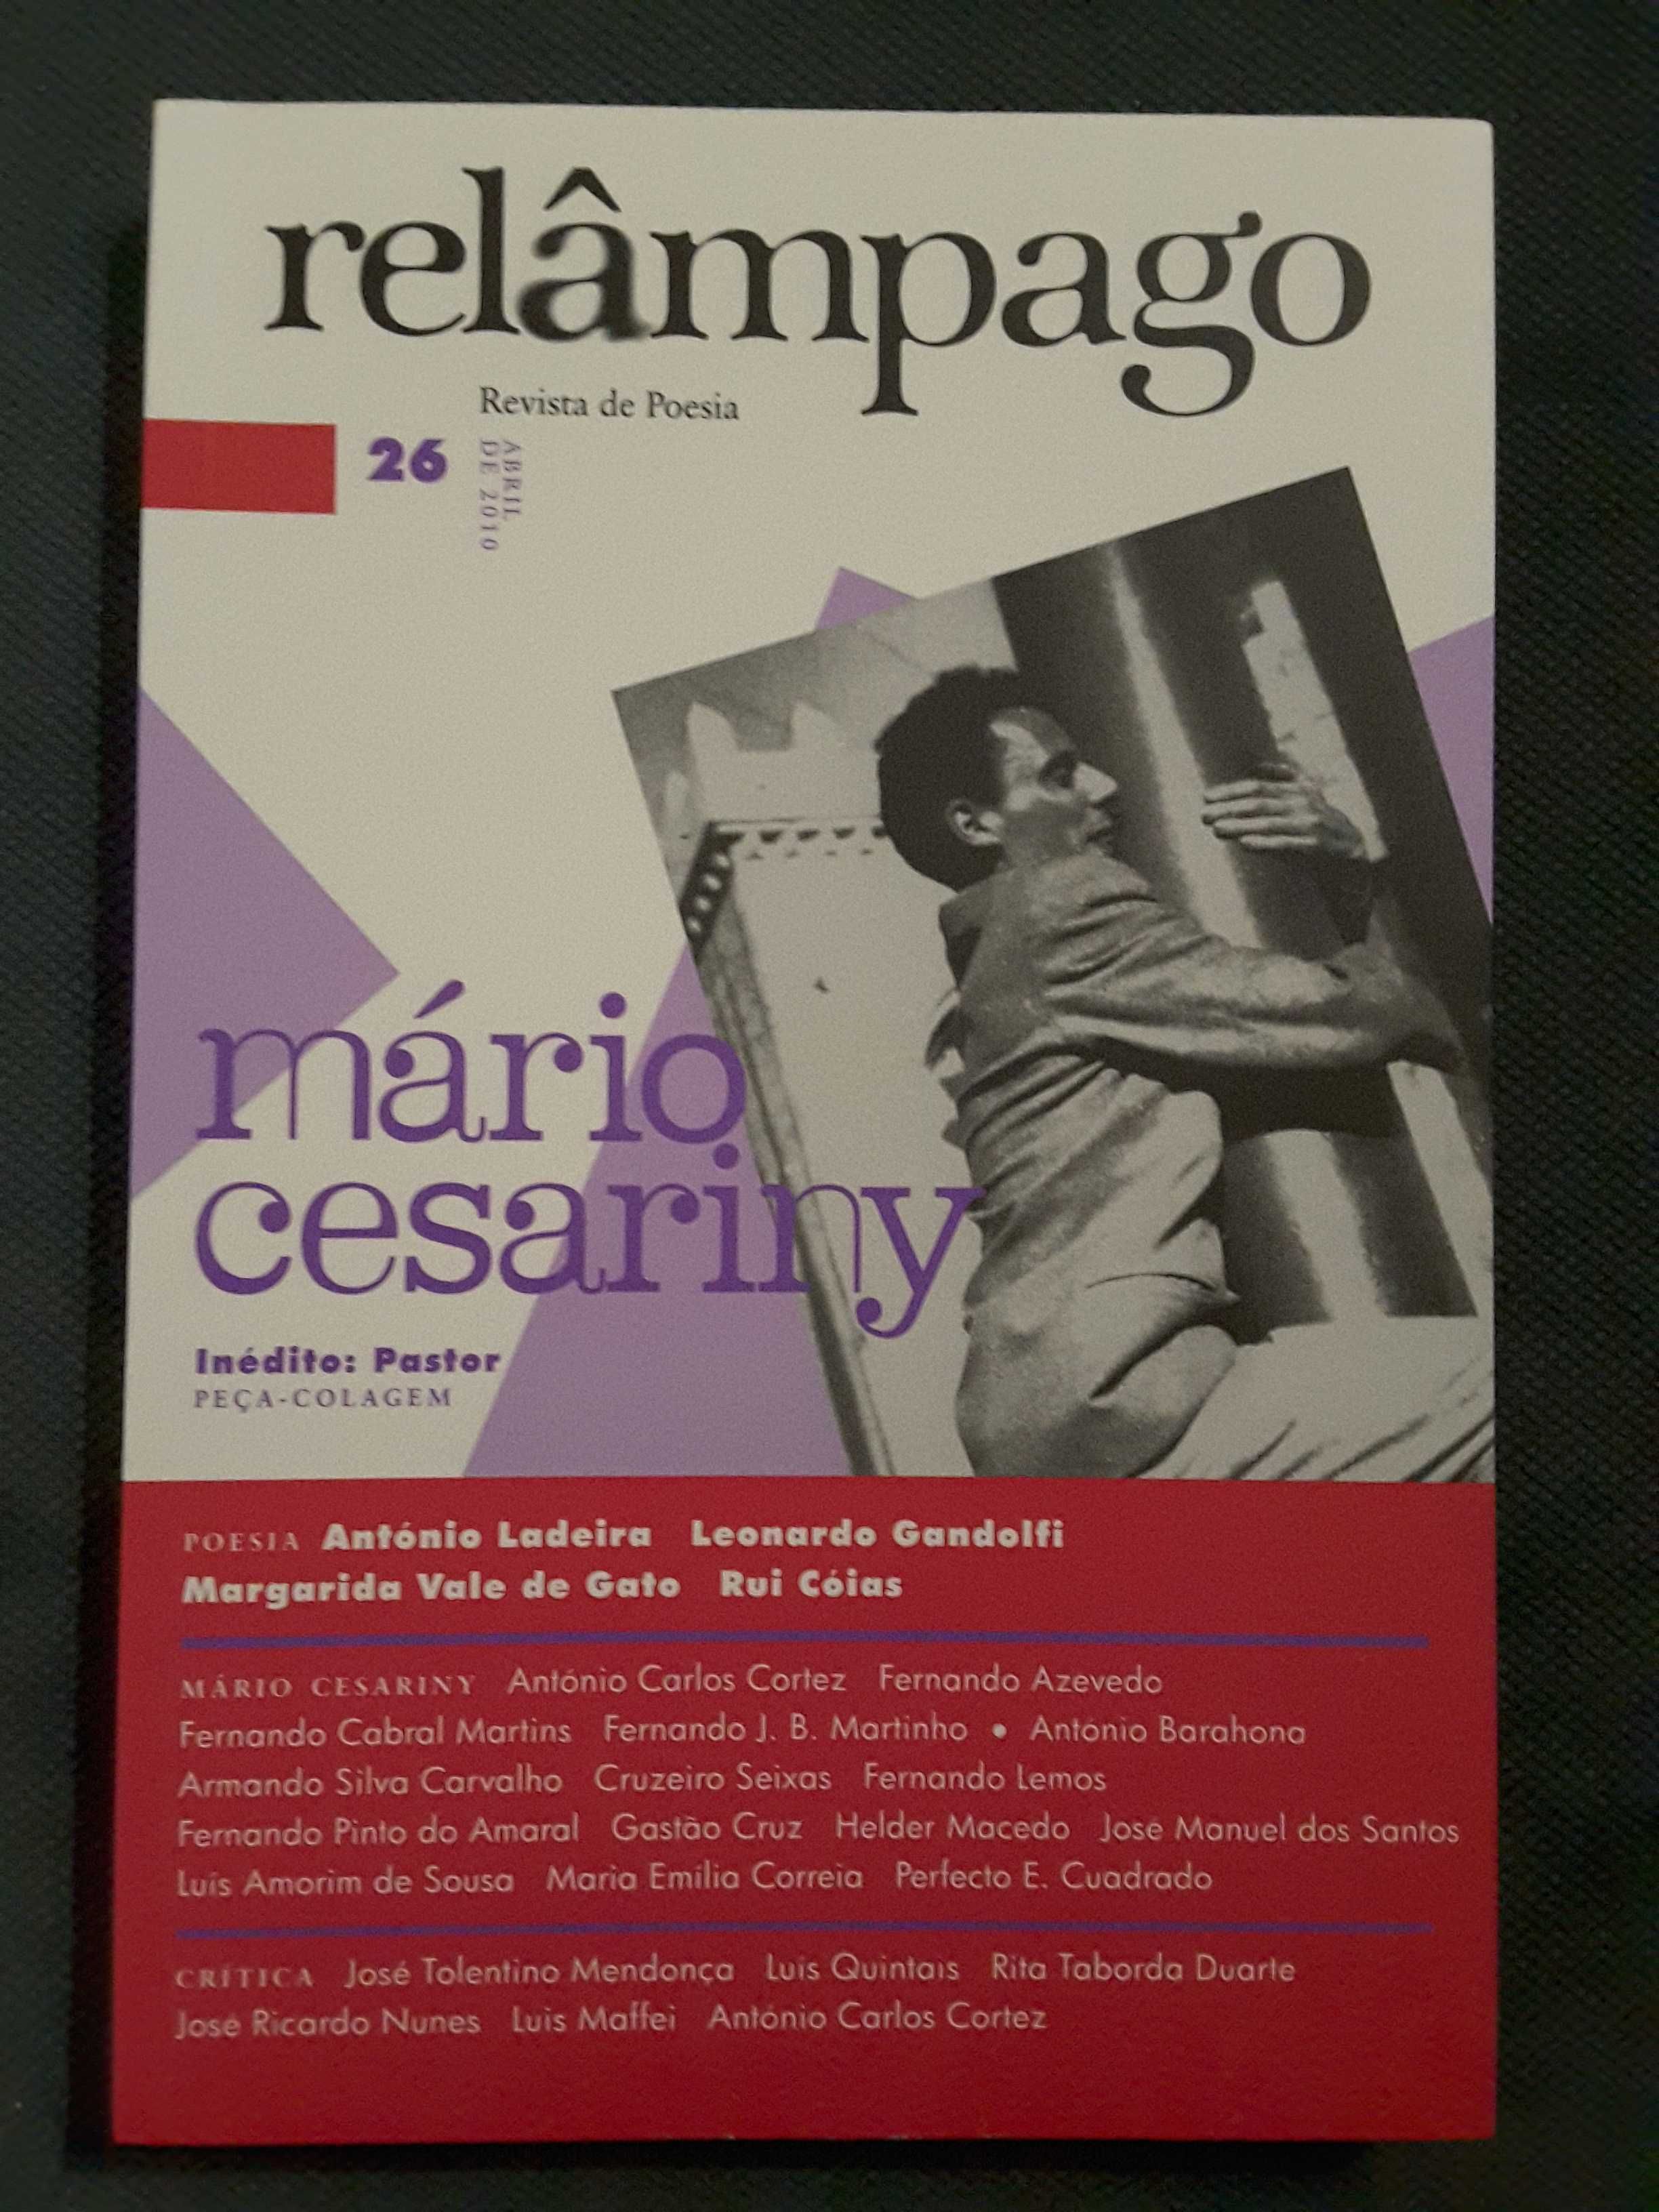 Relâmpago, Revista de Poesia: Mário Cesariny / Luiza Neto Jorge